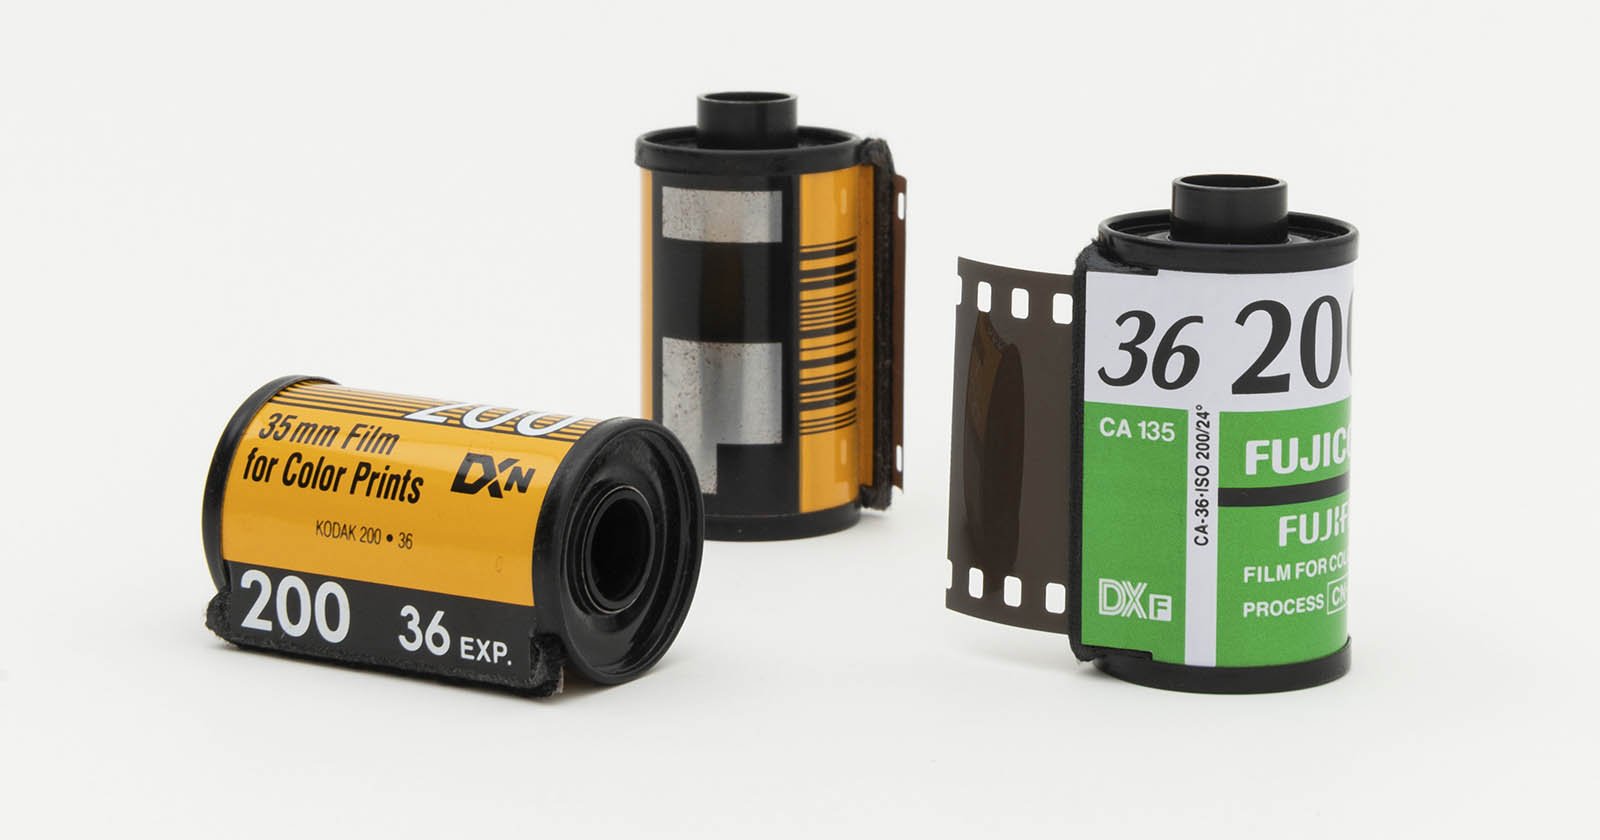 Fujifilm Instax Wide 200 Instant Film Camera - Refurbished